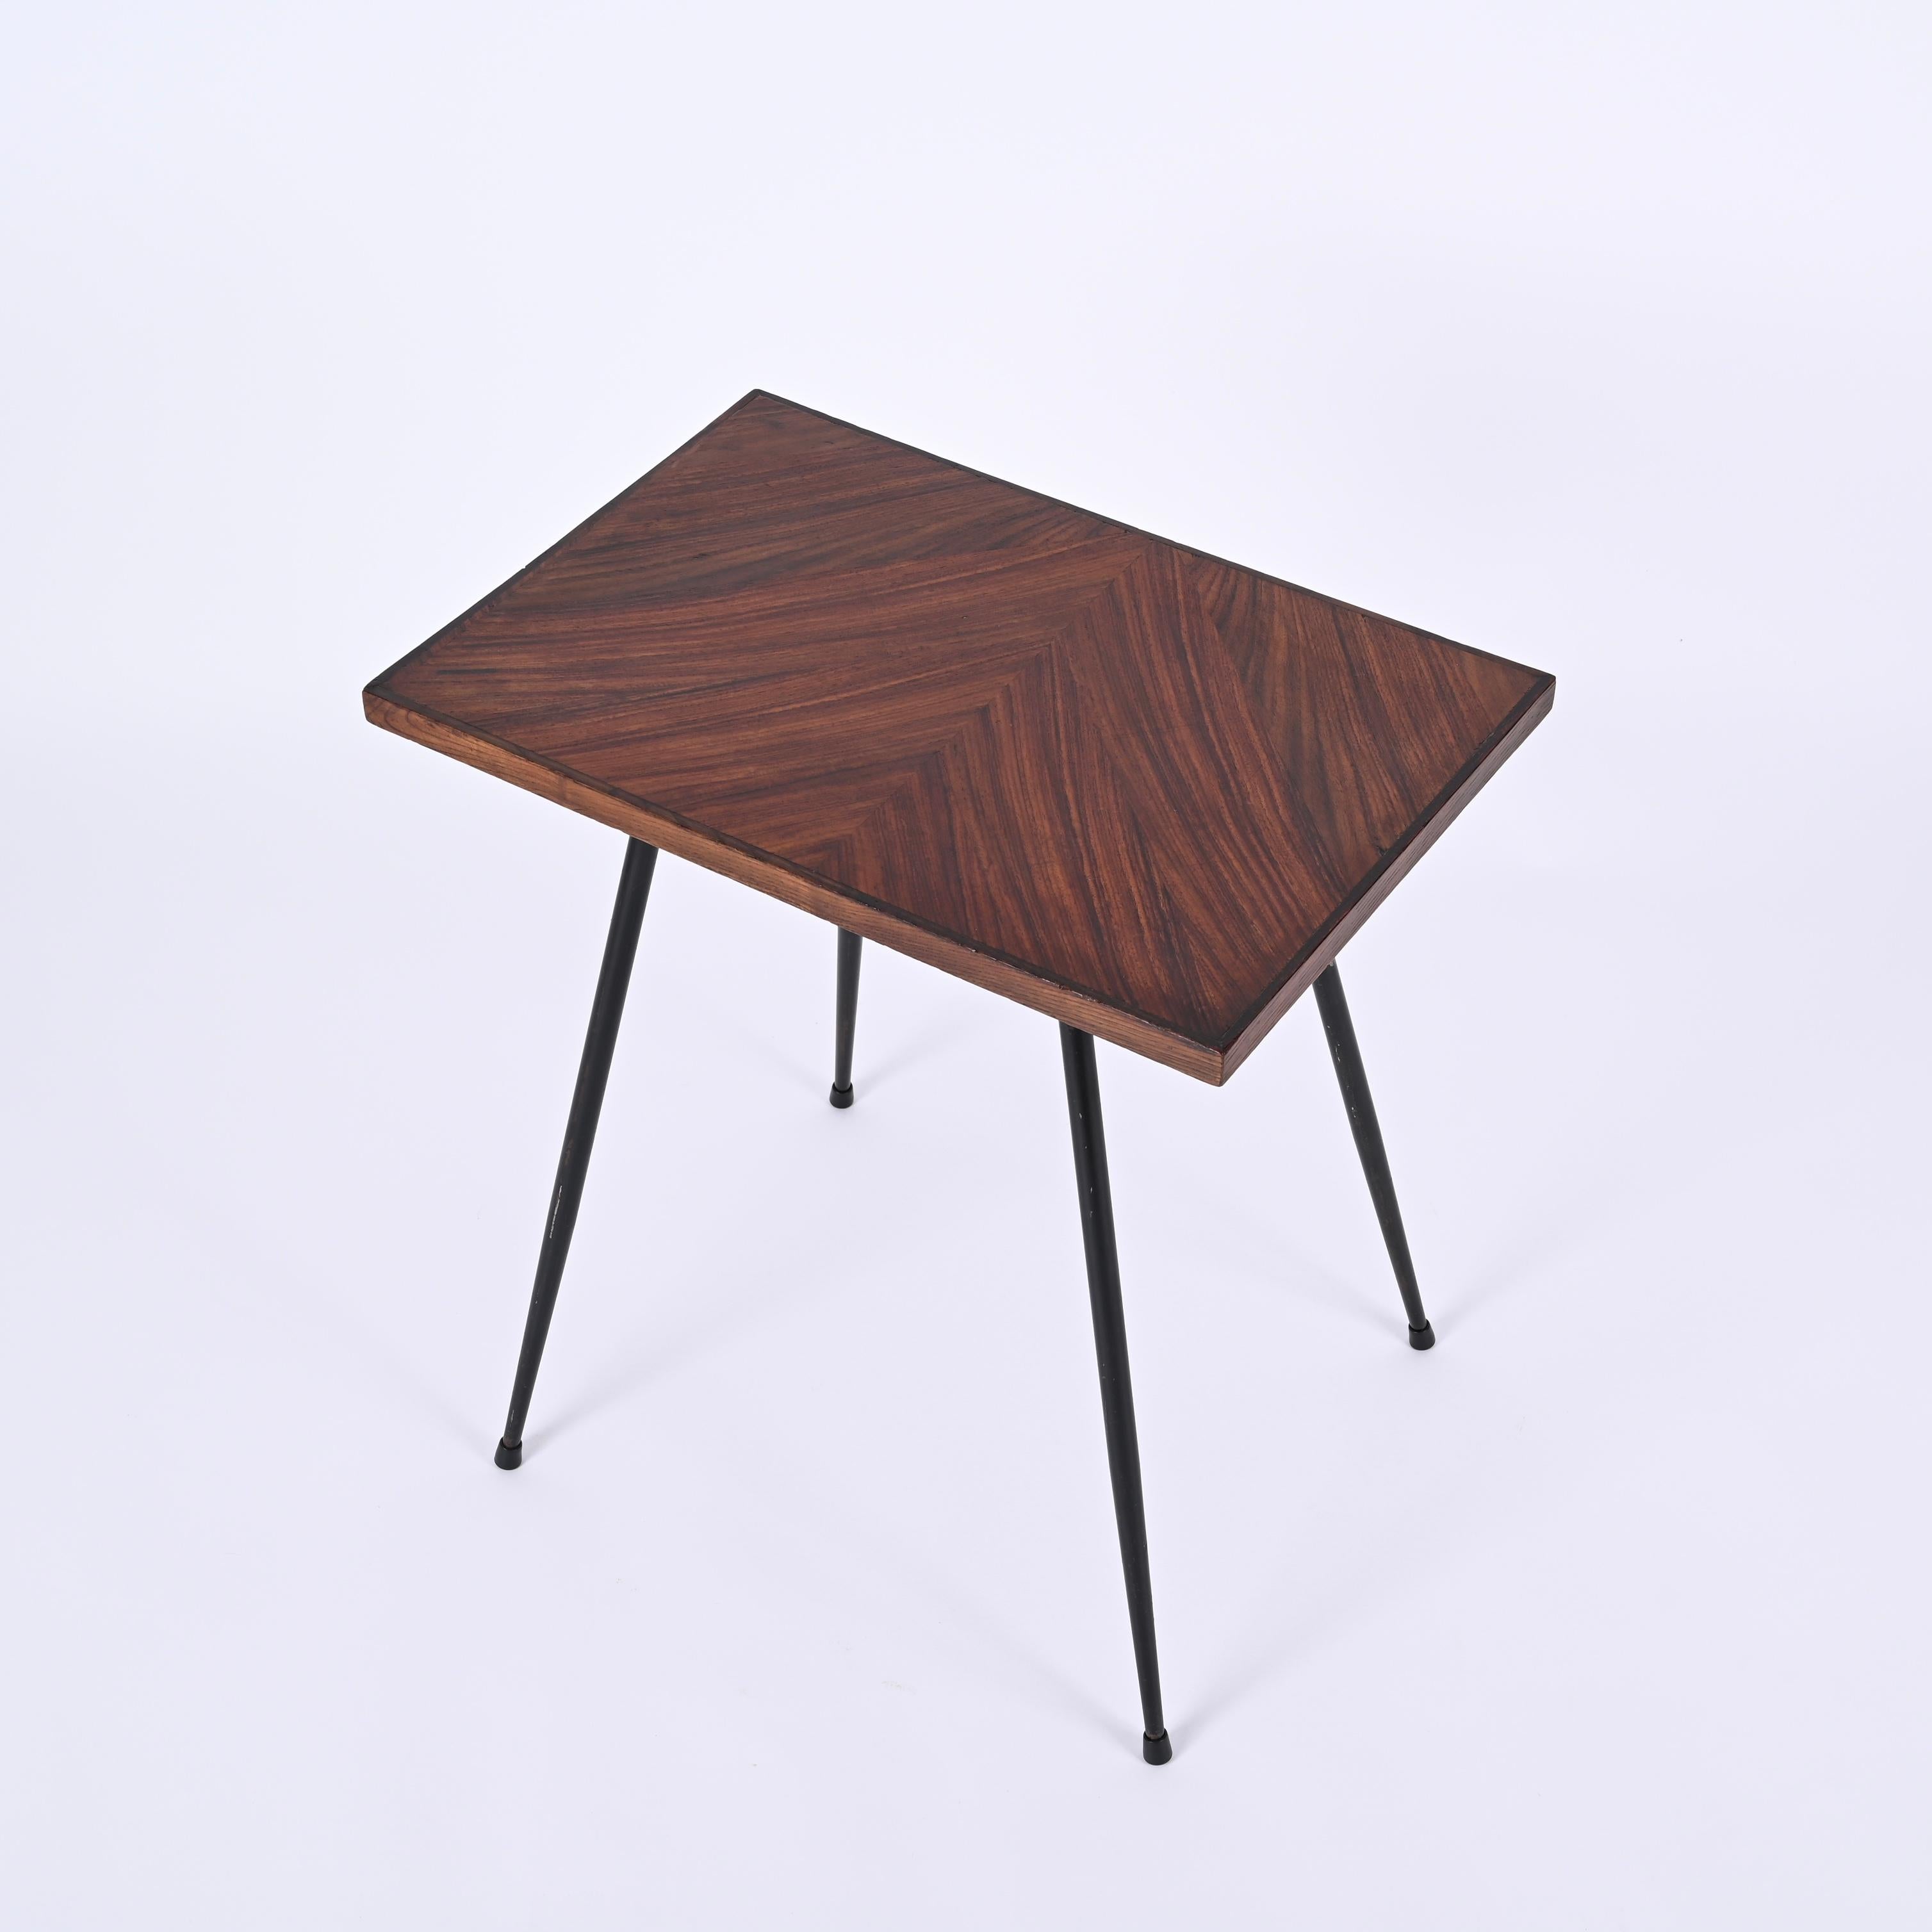 Italian Midcentury Rectangular Side Table in Teak Wood and Enameled Metal, 1950s For Sale 9